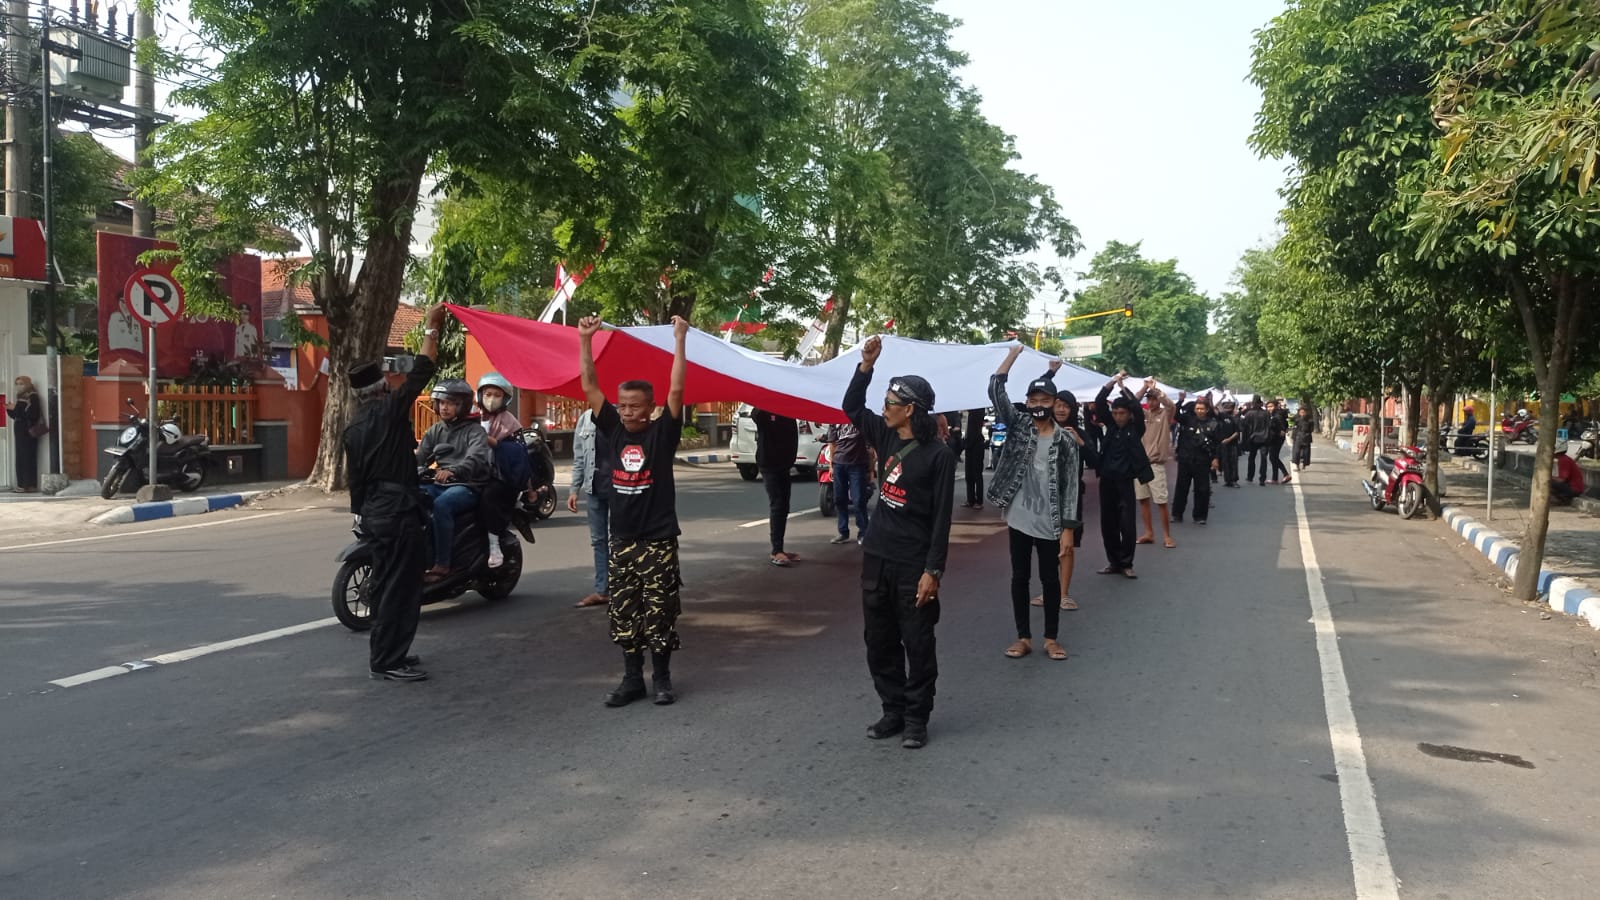 PNIB Kirab Merah Putih Jombang Jawa Timur Kota Santri & Pluralisme, Selamanya Tolak Khilafah & Politik Identitas